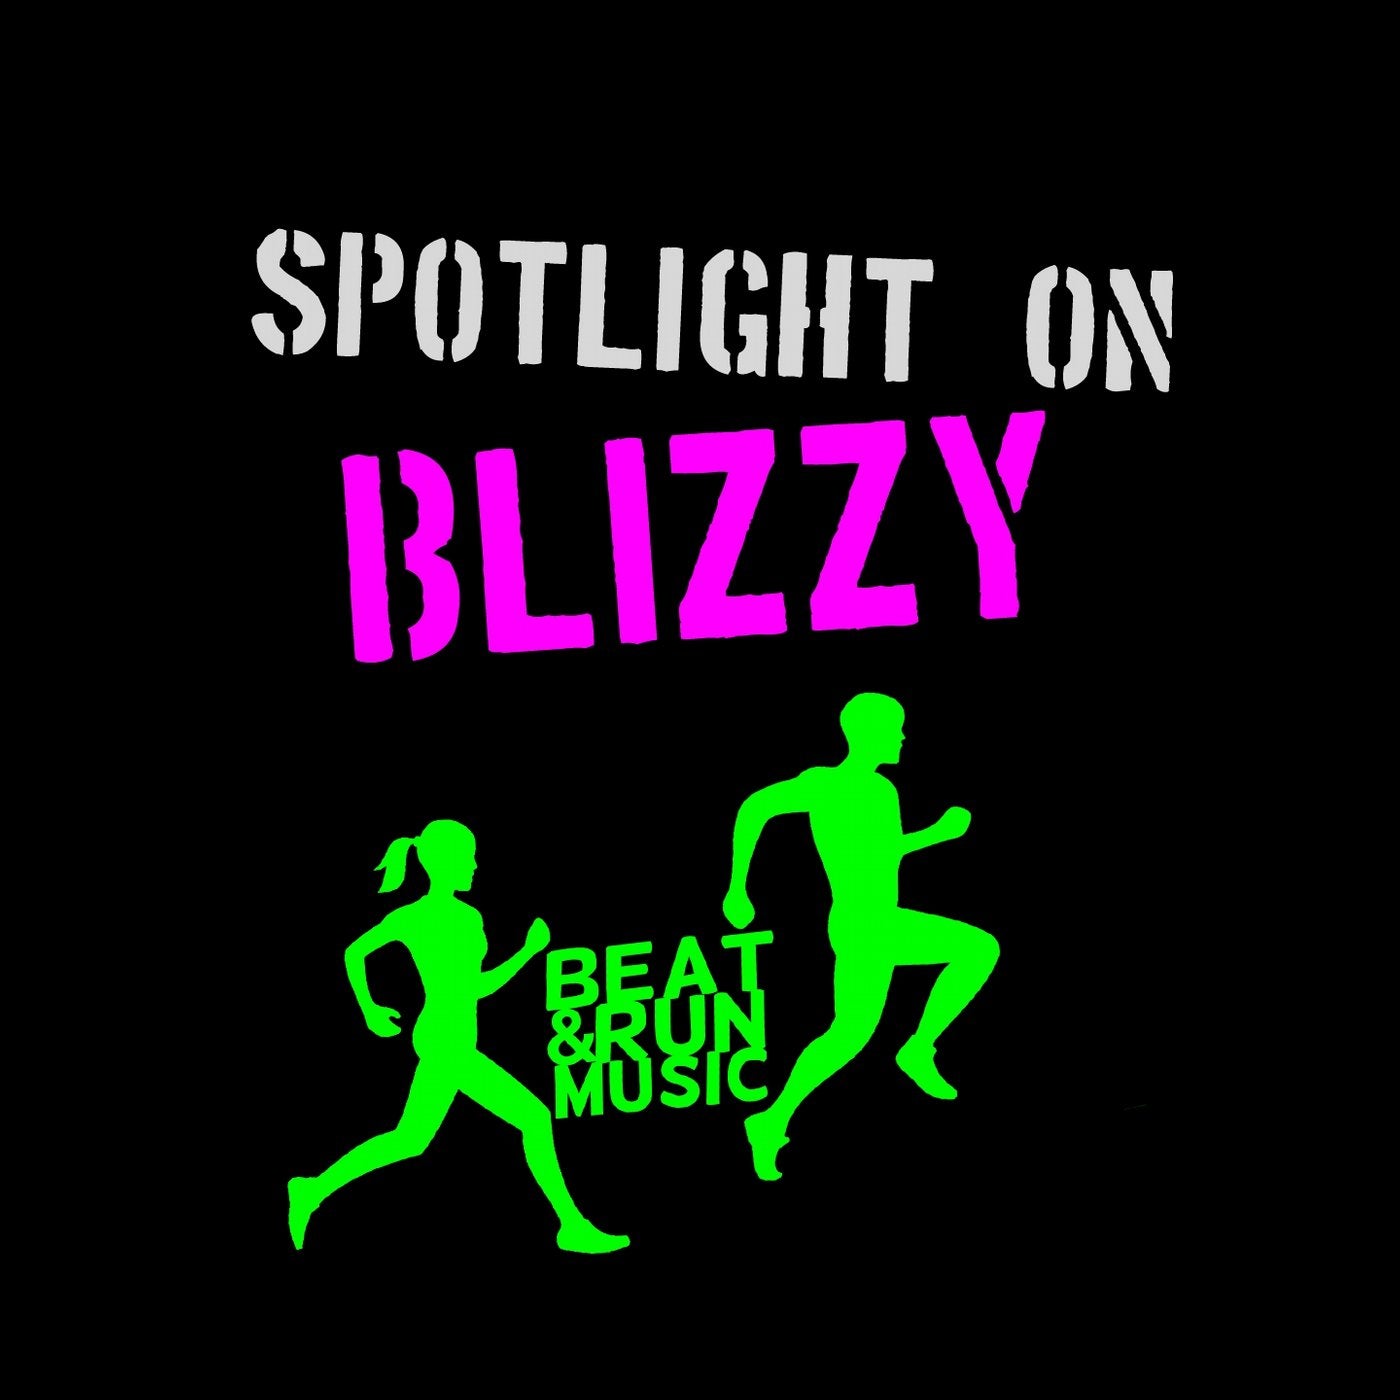 Spotlight on Blizzy